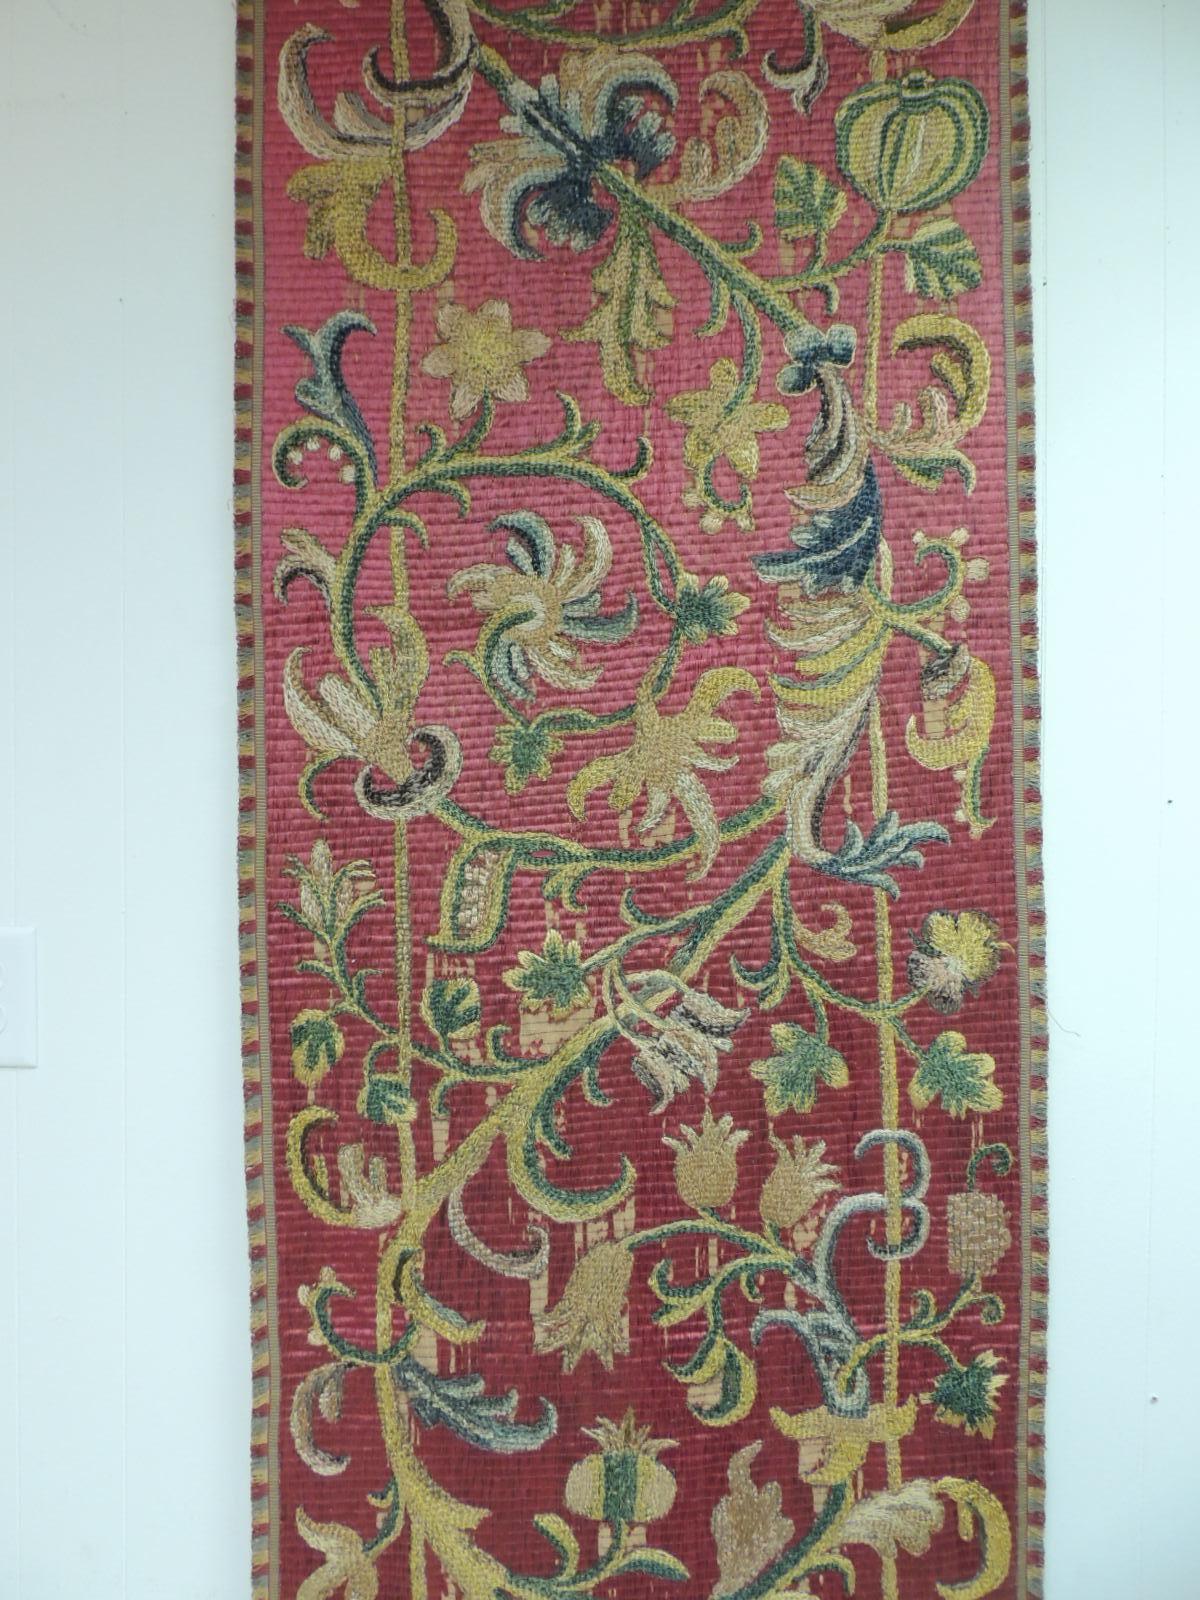 silk floss embroidery